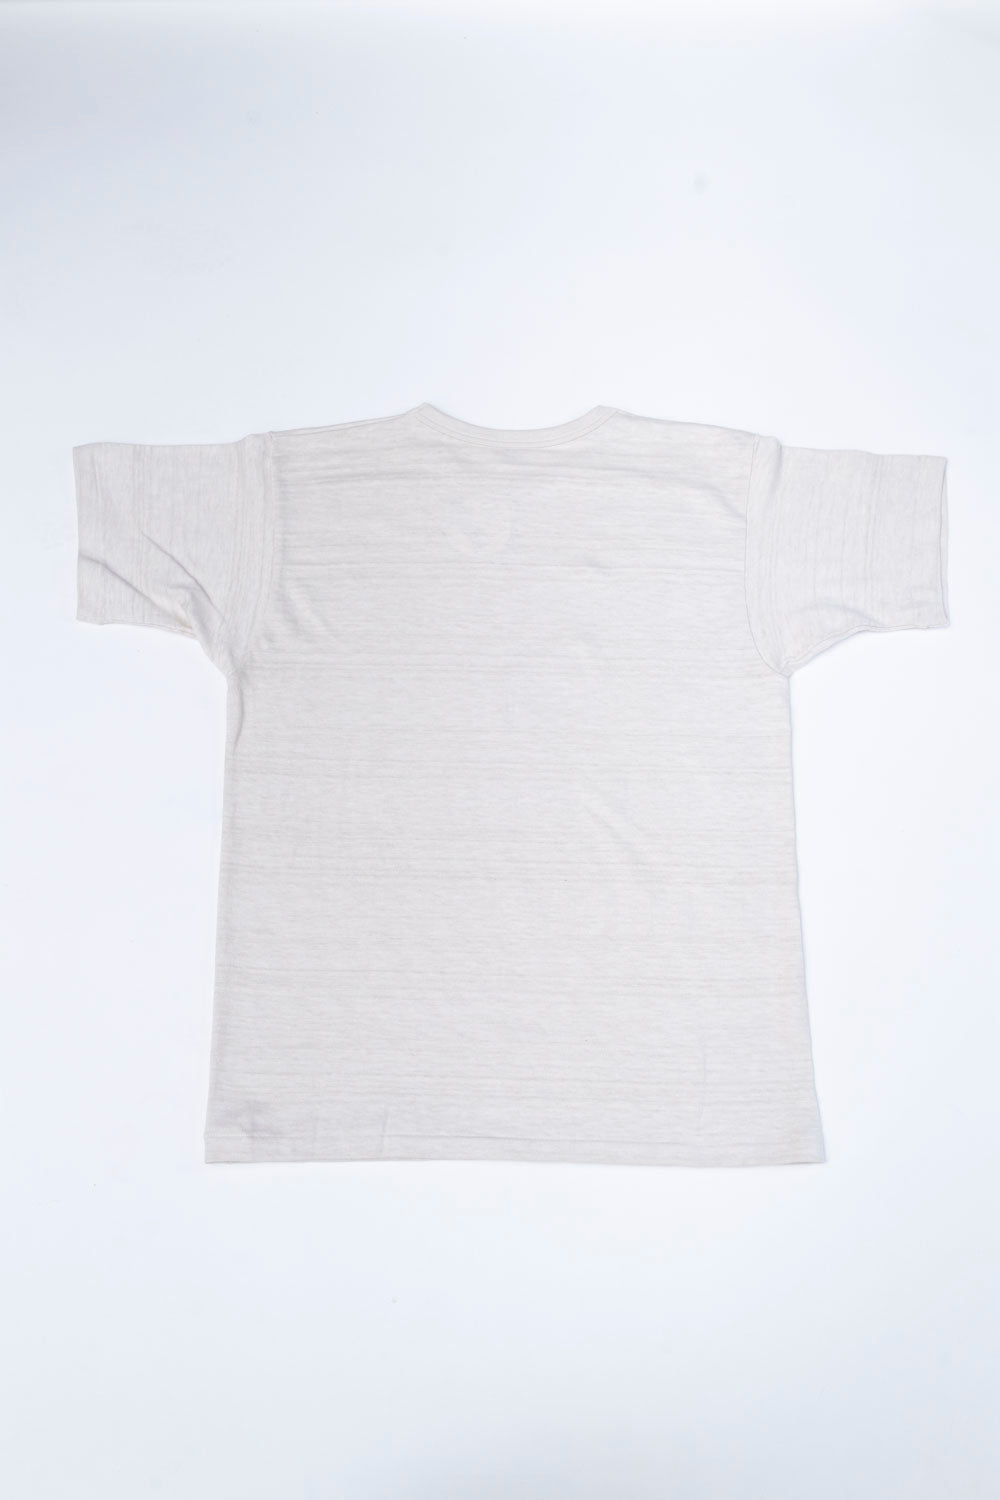 Lot JG-CS06 - Plain Slubby T-Shirt - Beige